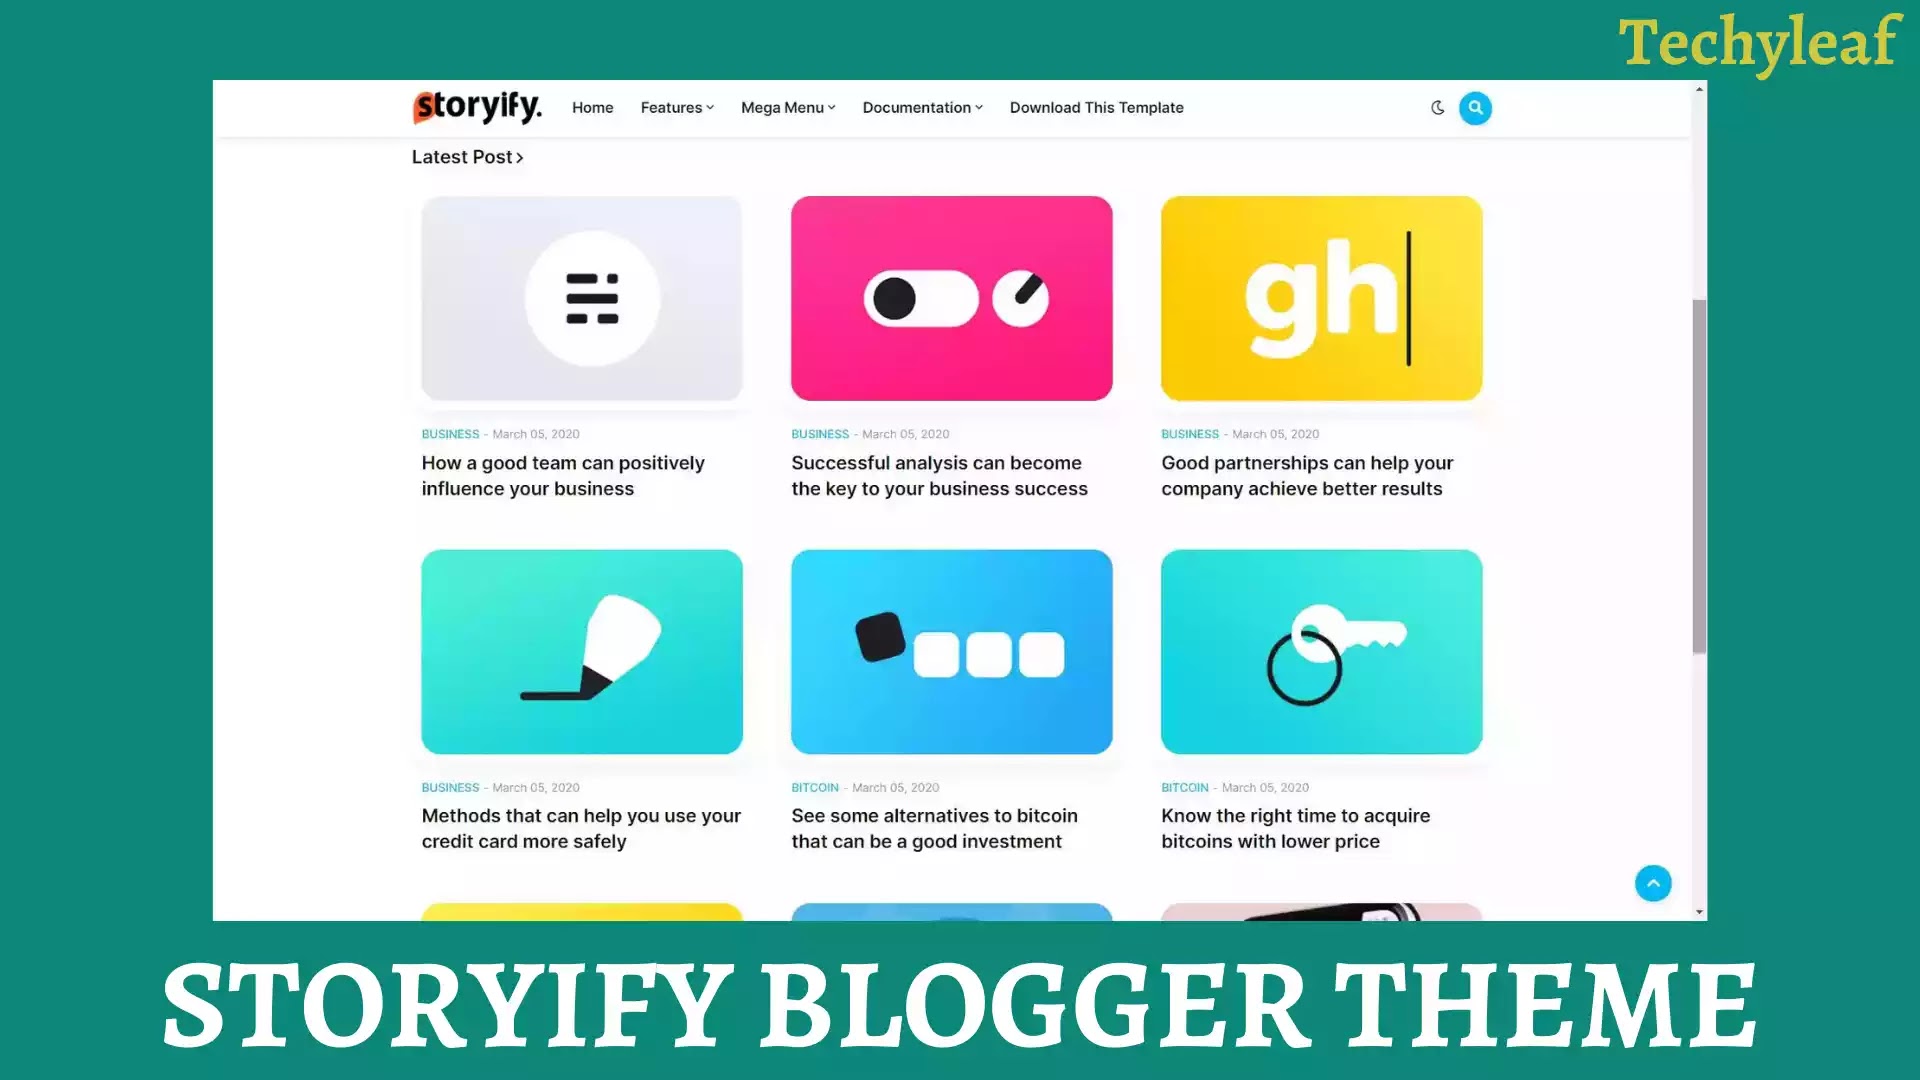 storify-premium-blogger-theme-review-download-free-techyleaf